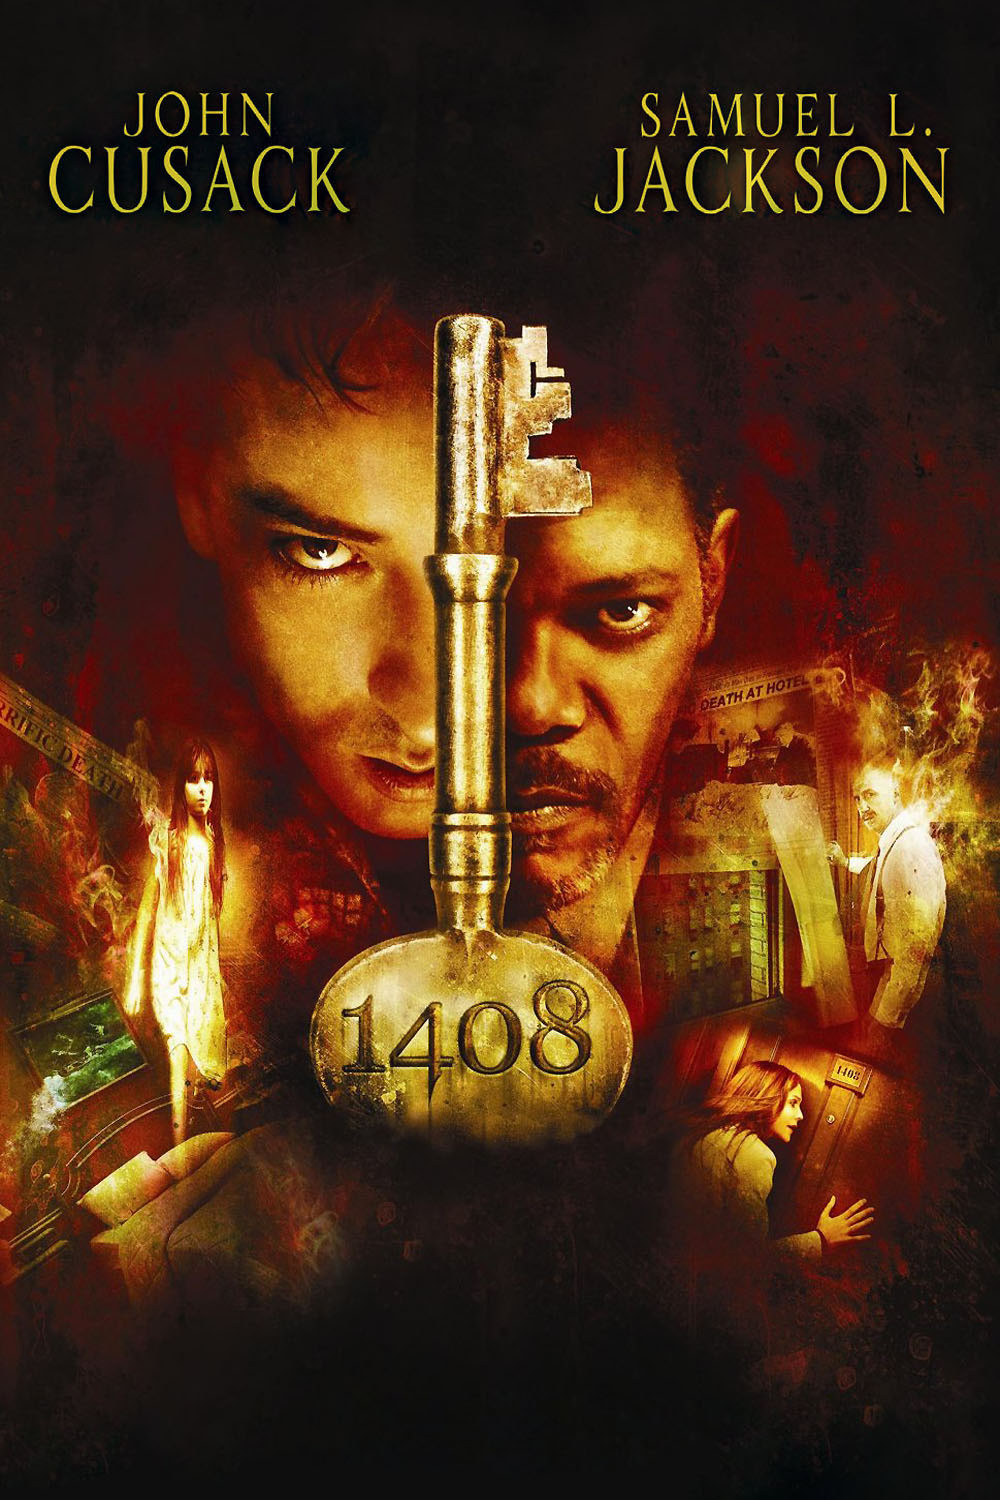 1408 movie subtitles